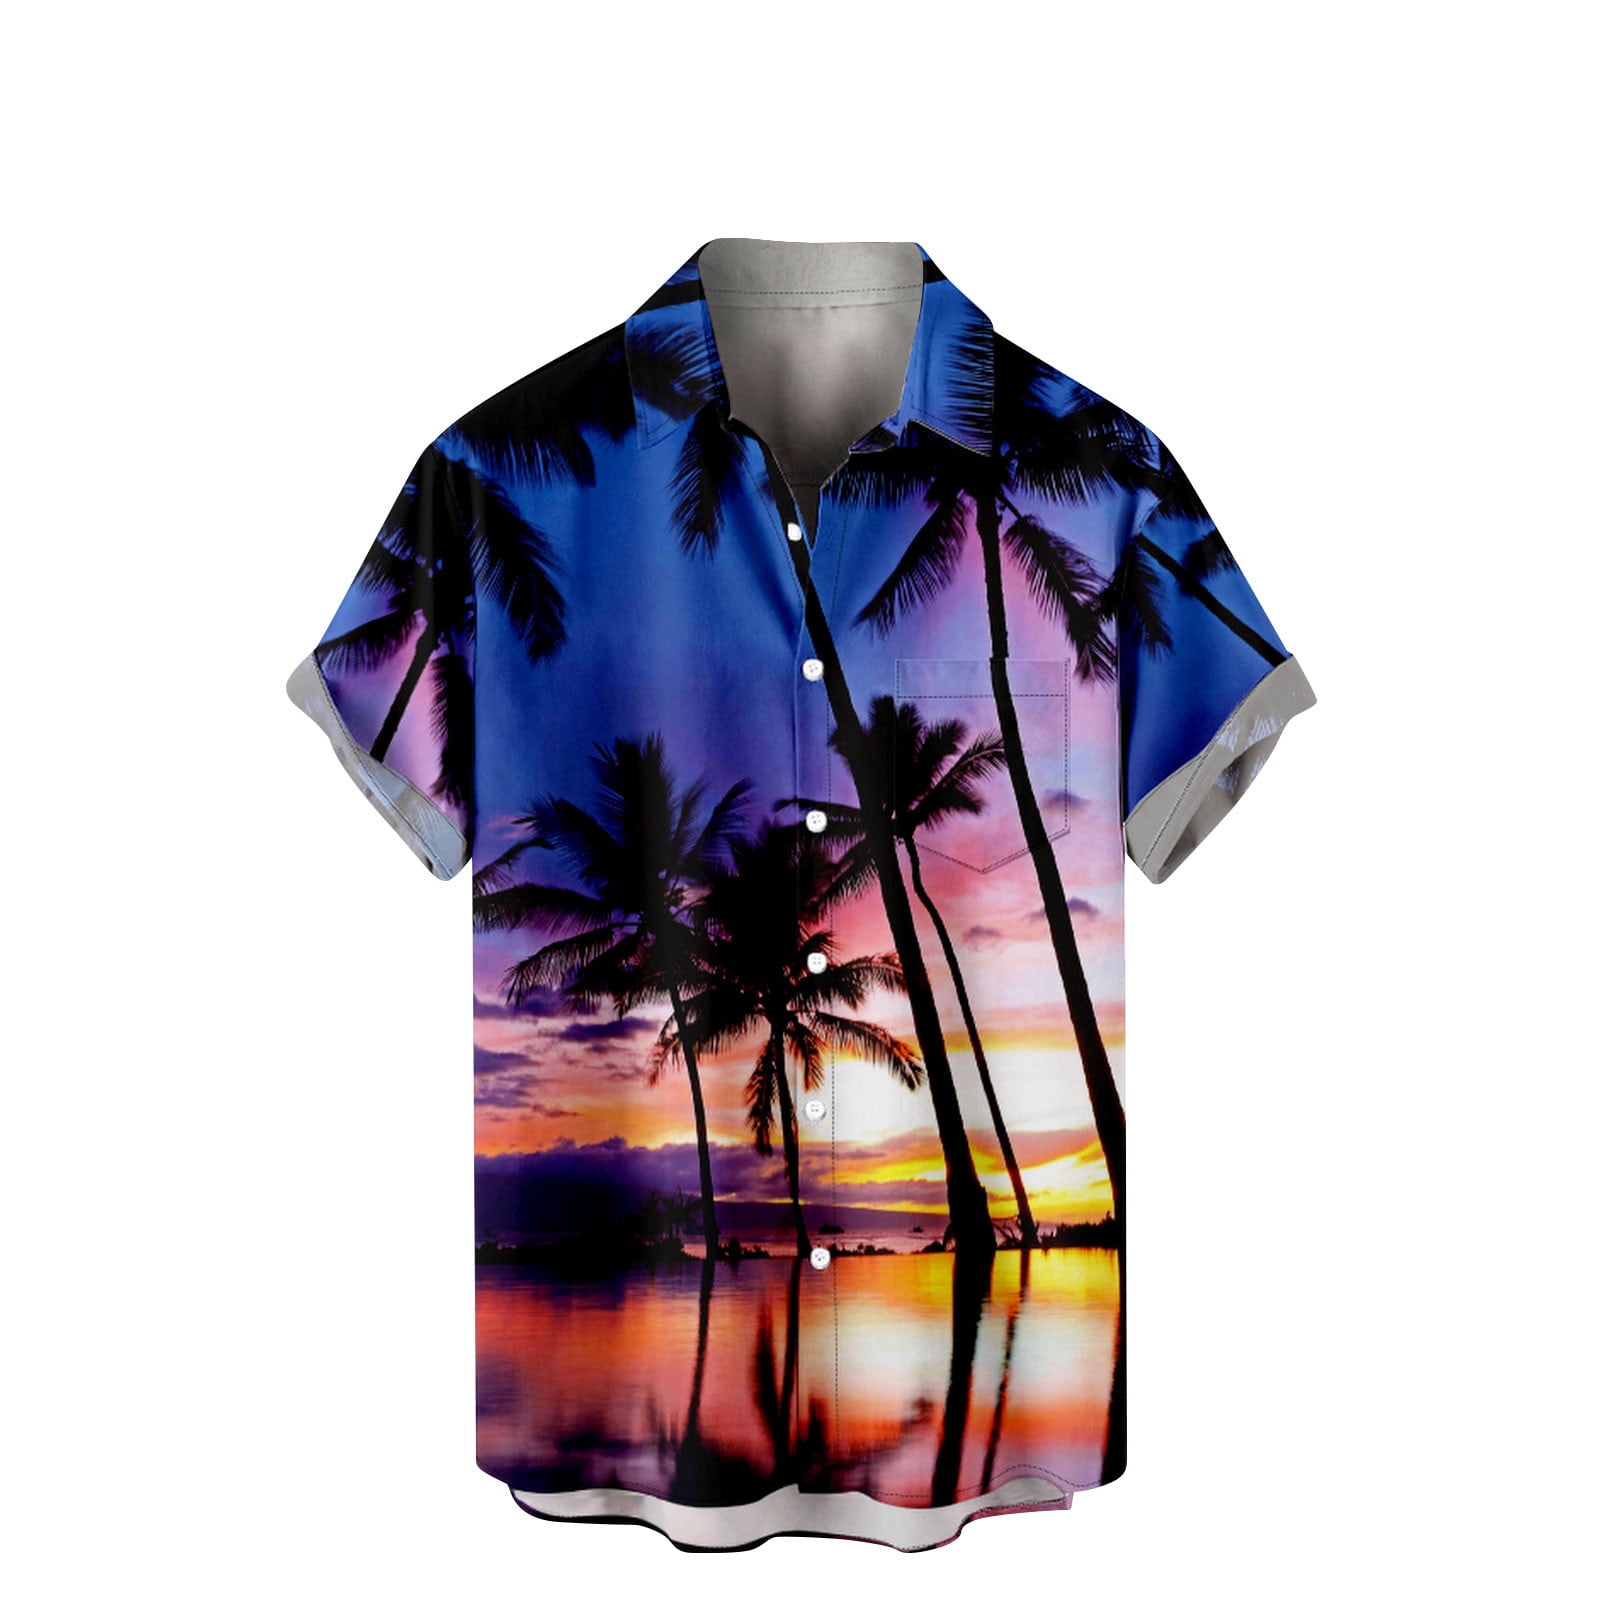 ZCFZJW Men's 4 Way Stretch Hawaiian Shirt Tropical Beach Shirts Casual  Short Sleeve Button Down Graphic T-Shirts Summer Big and Tall Tops Yellow L  